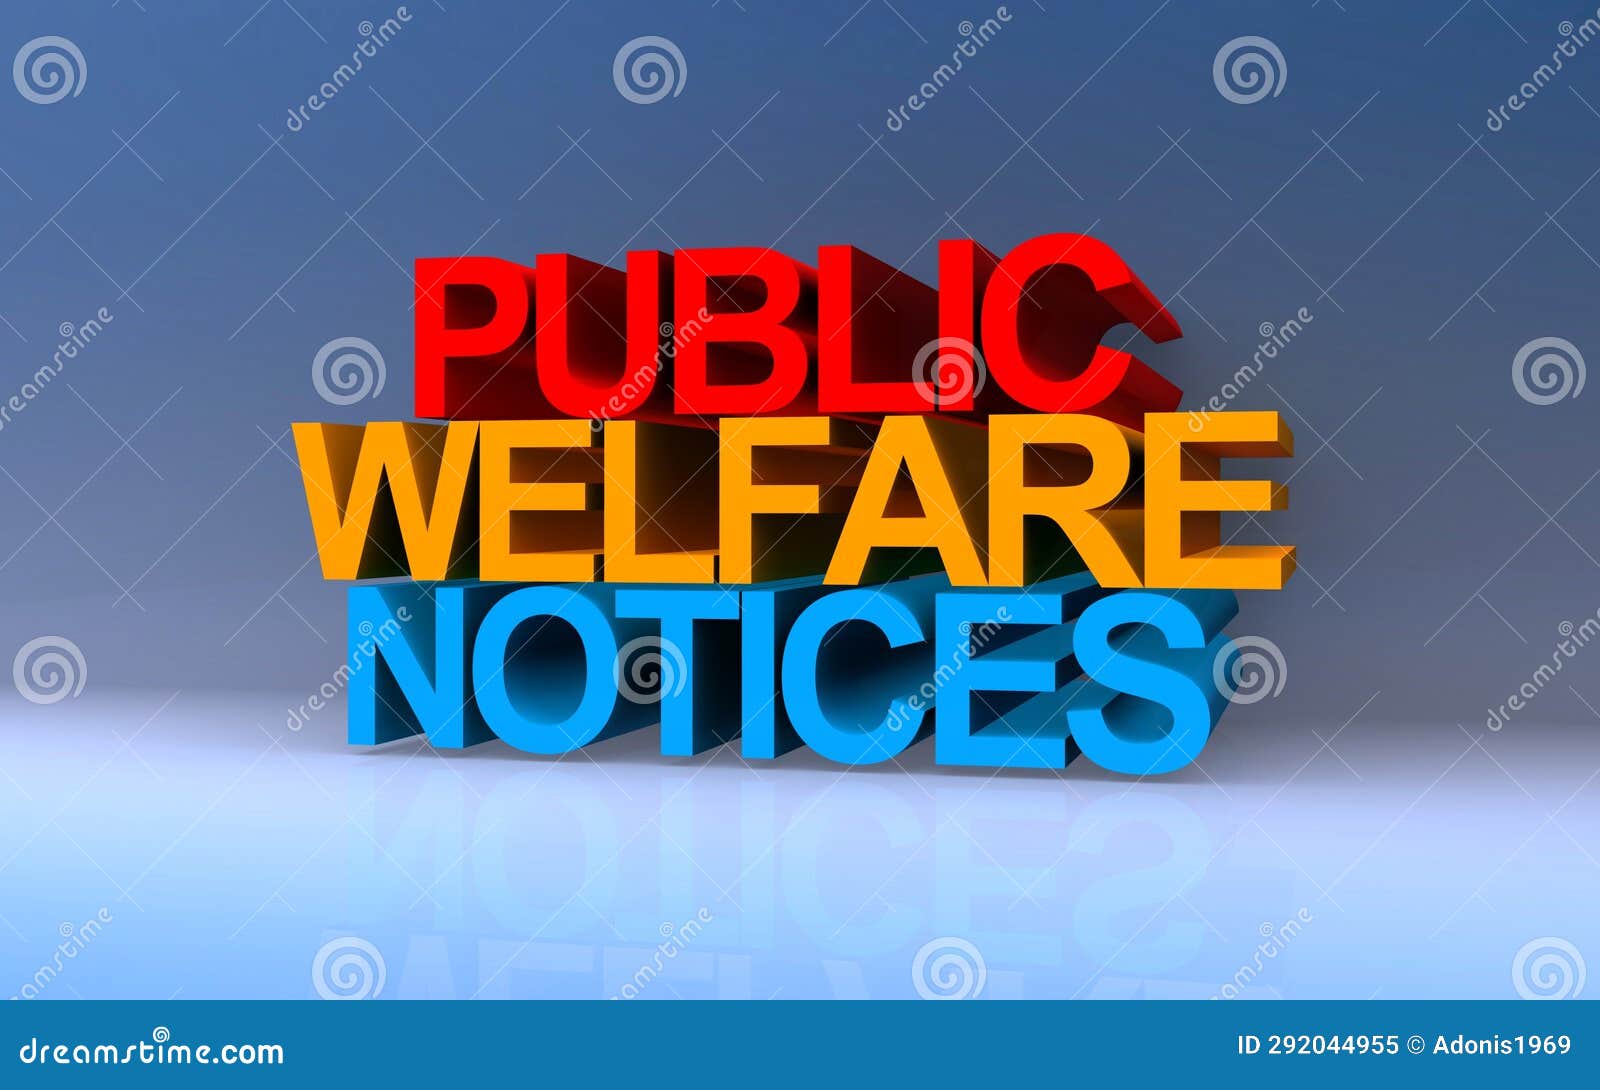 public welfare notices on blue